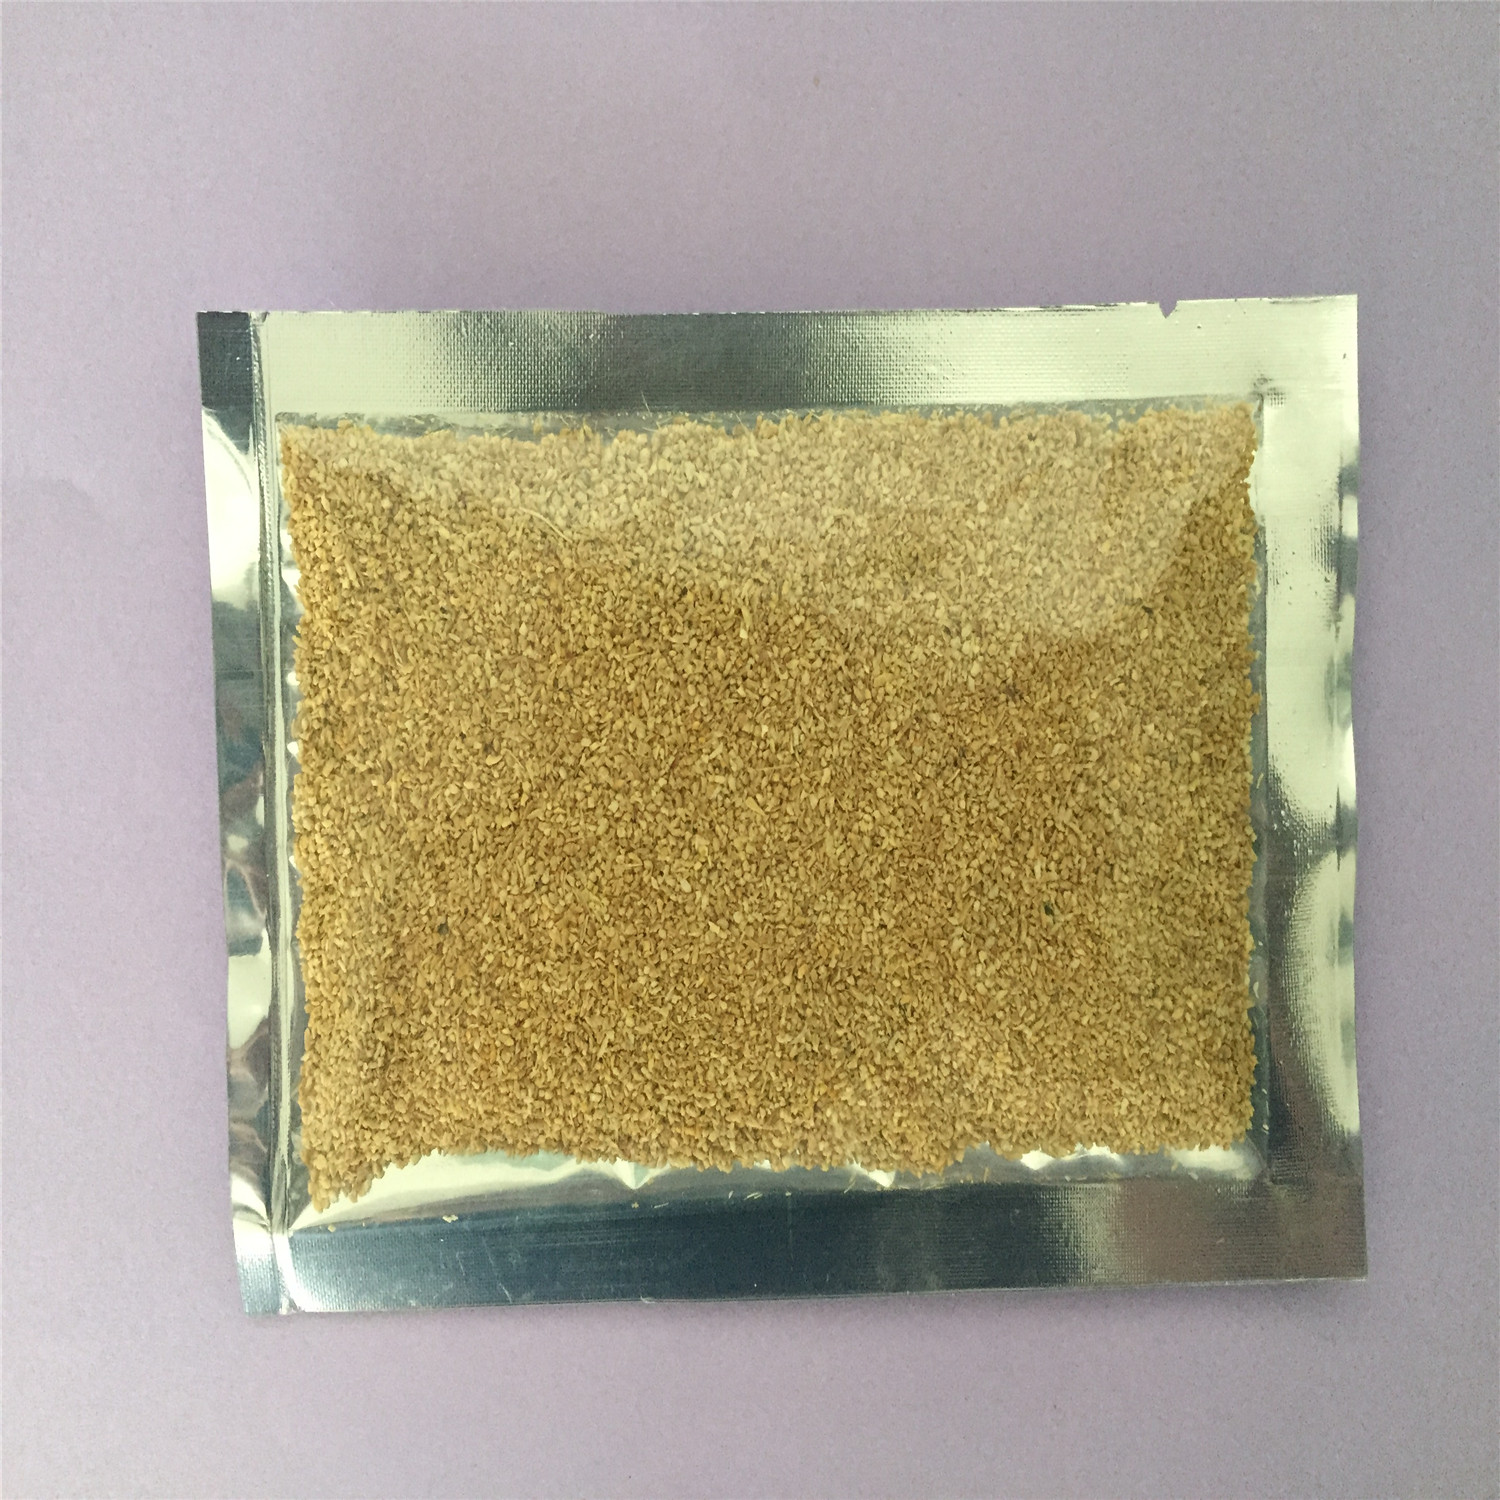 fosforil kegunaan bencil succinil jubiloso cloro cloruro de colina